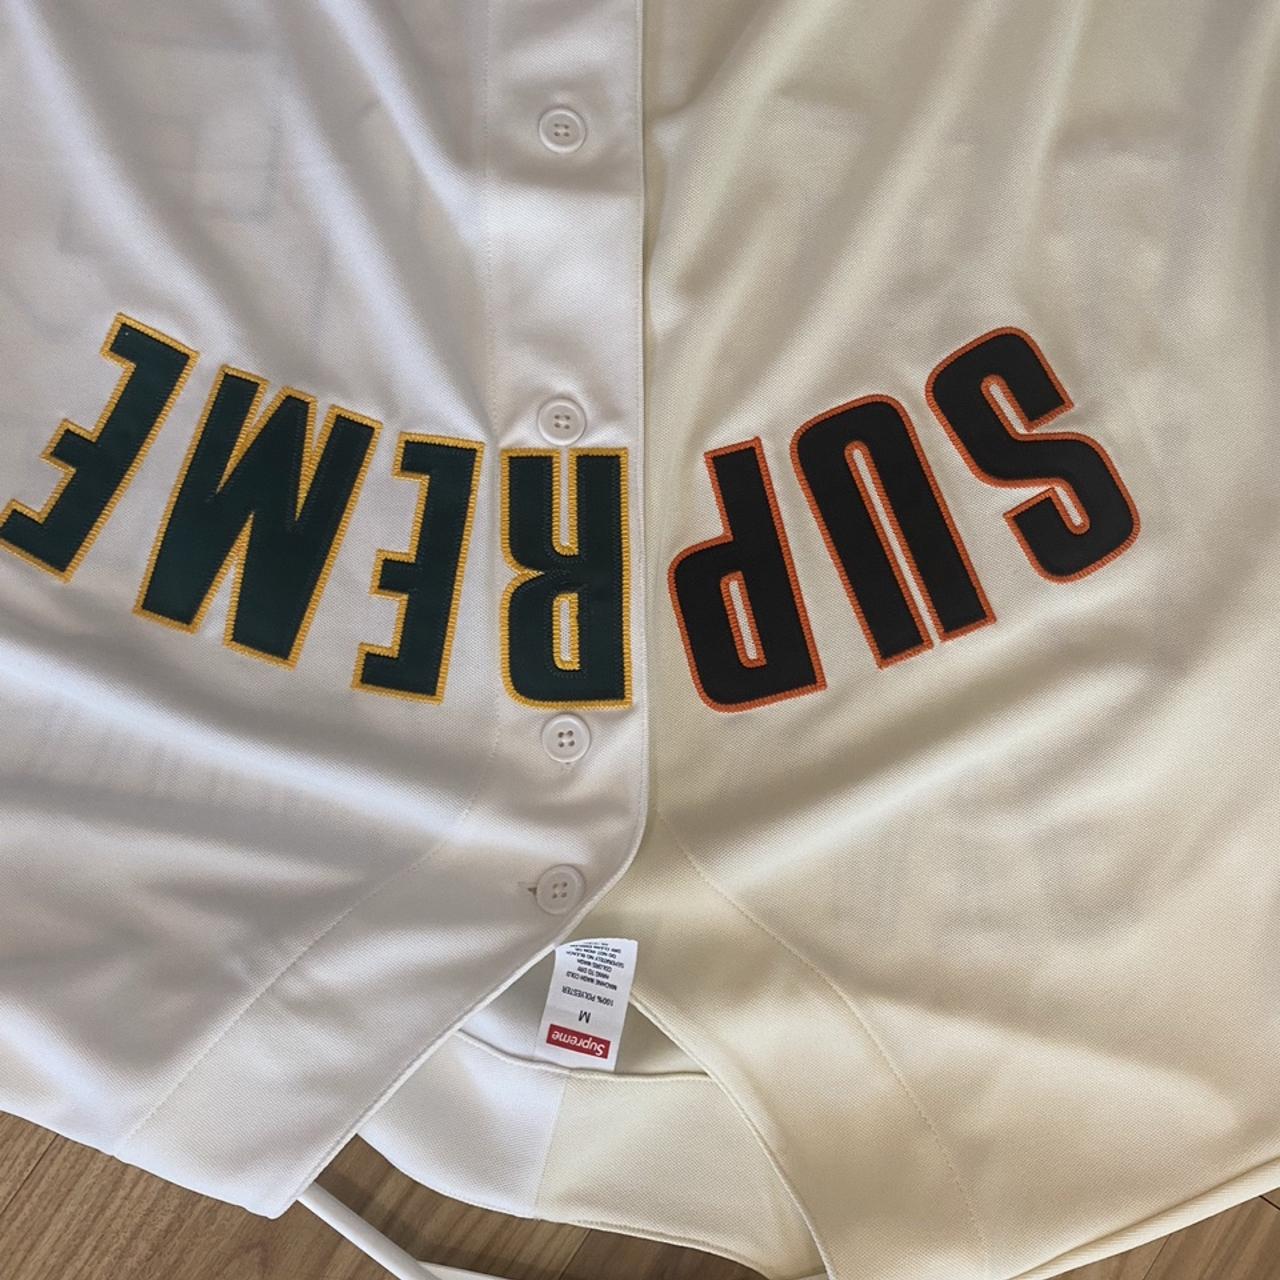 Supreme don't hate baseball jersey- XL – Million Dollar Streetwear